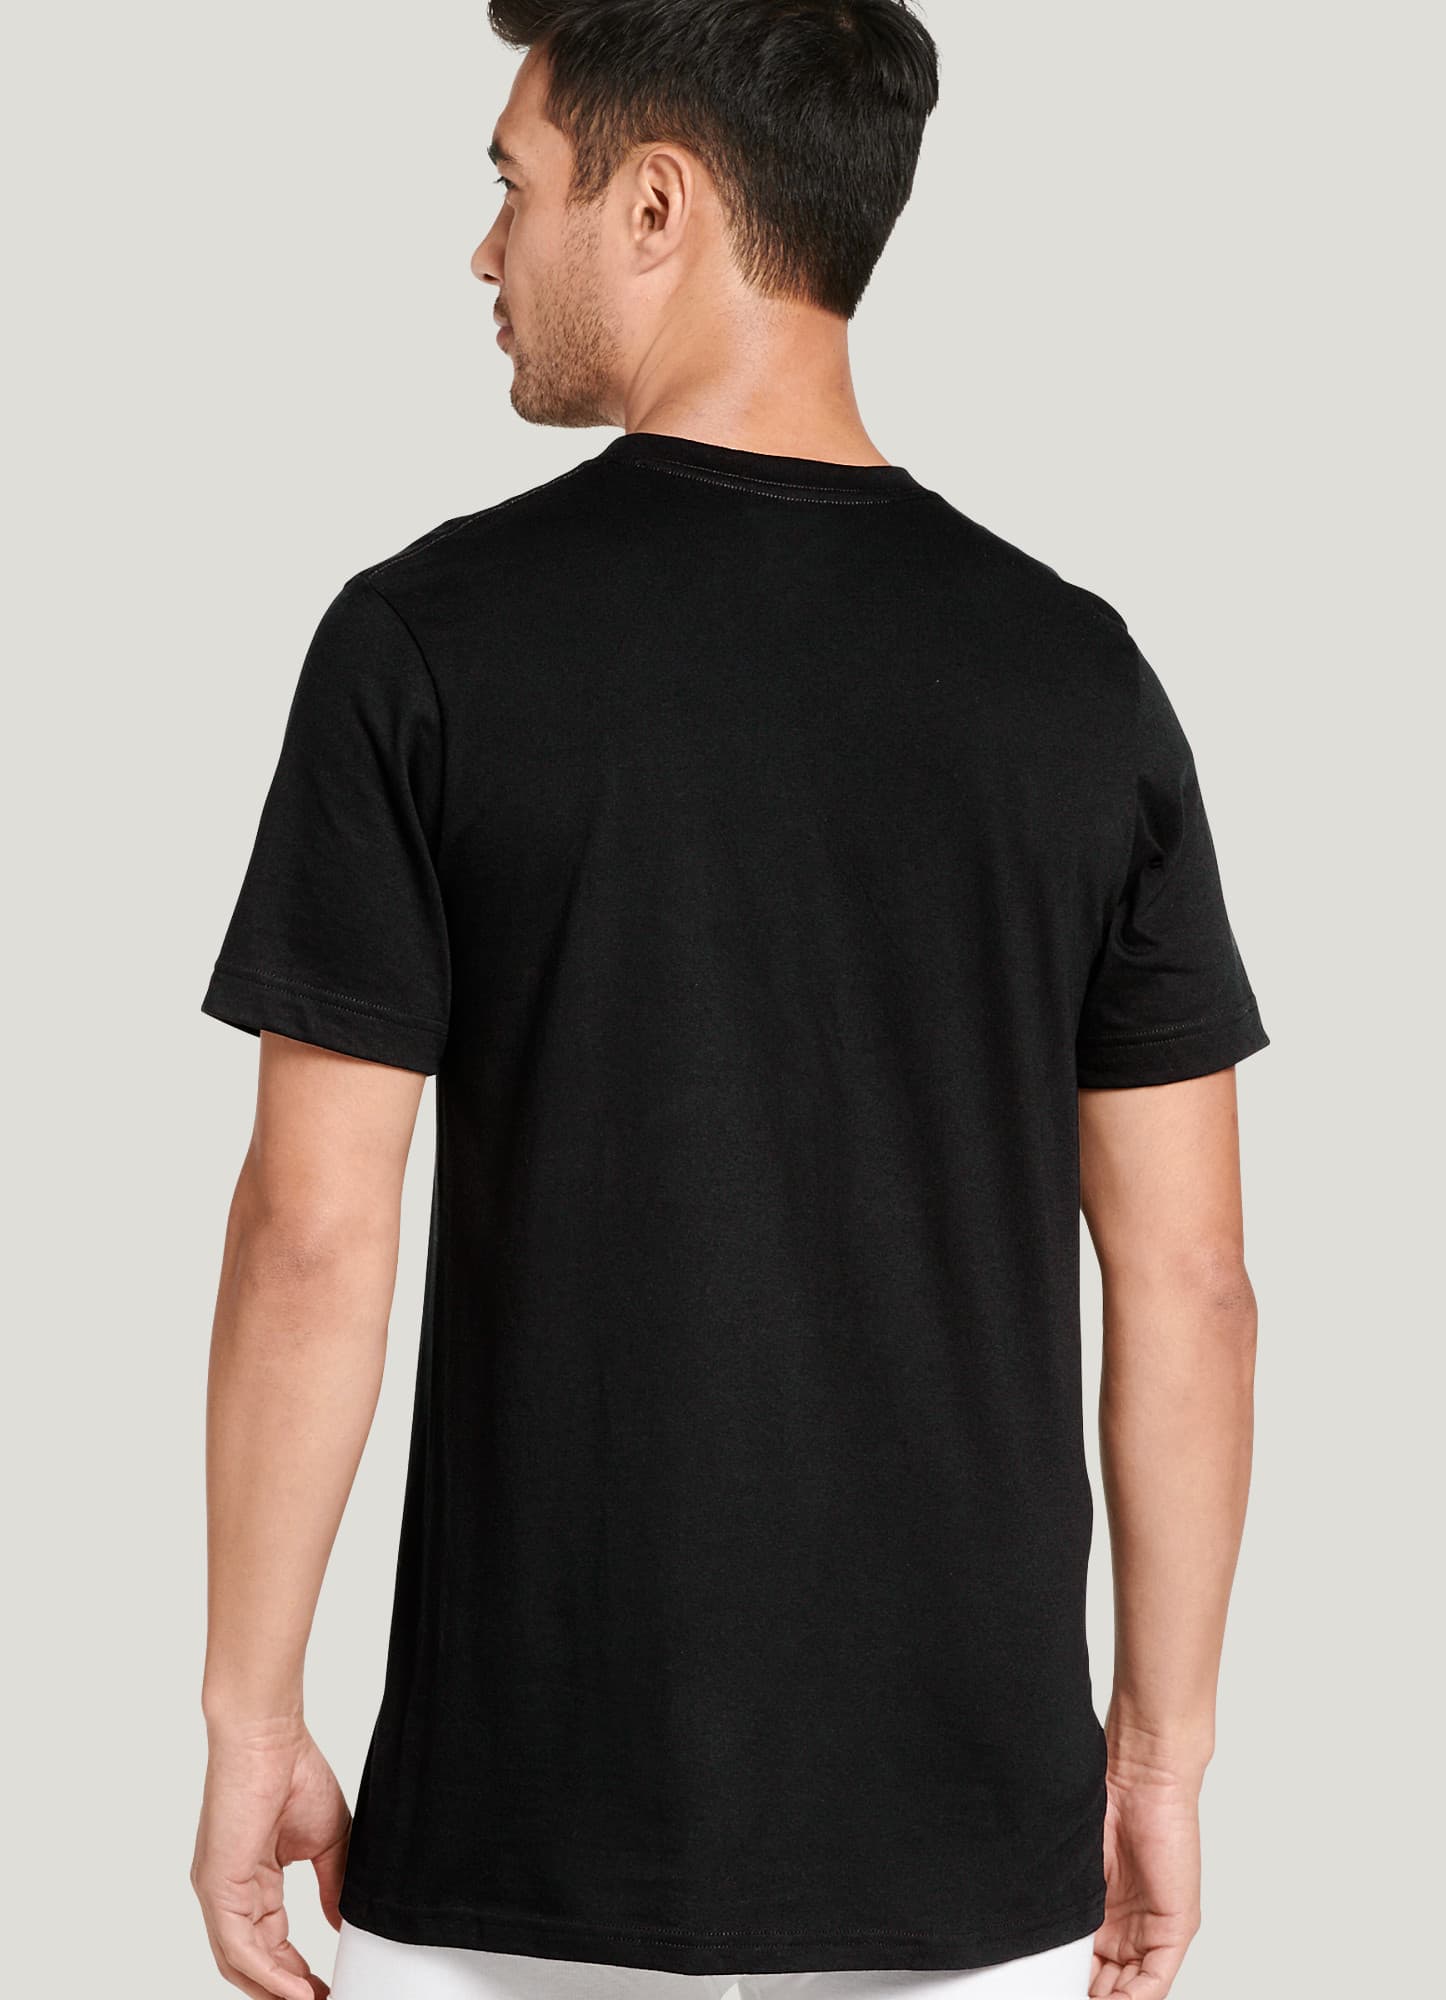 Short Sleeve T Shirts, Fast & Free Shipping At $59